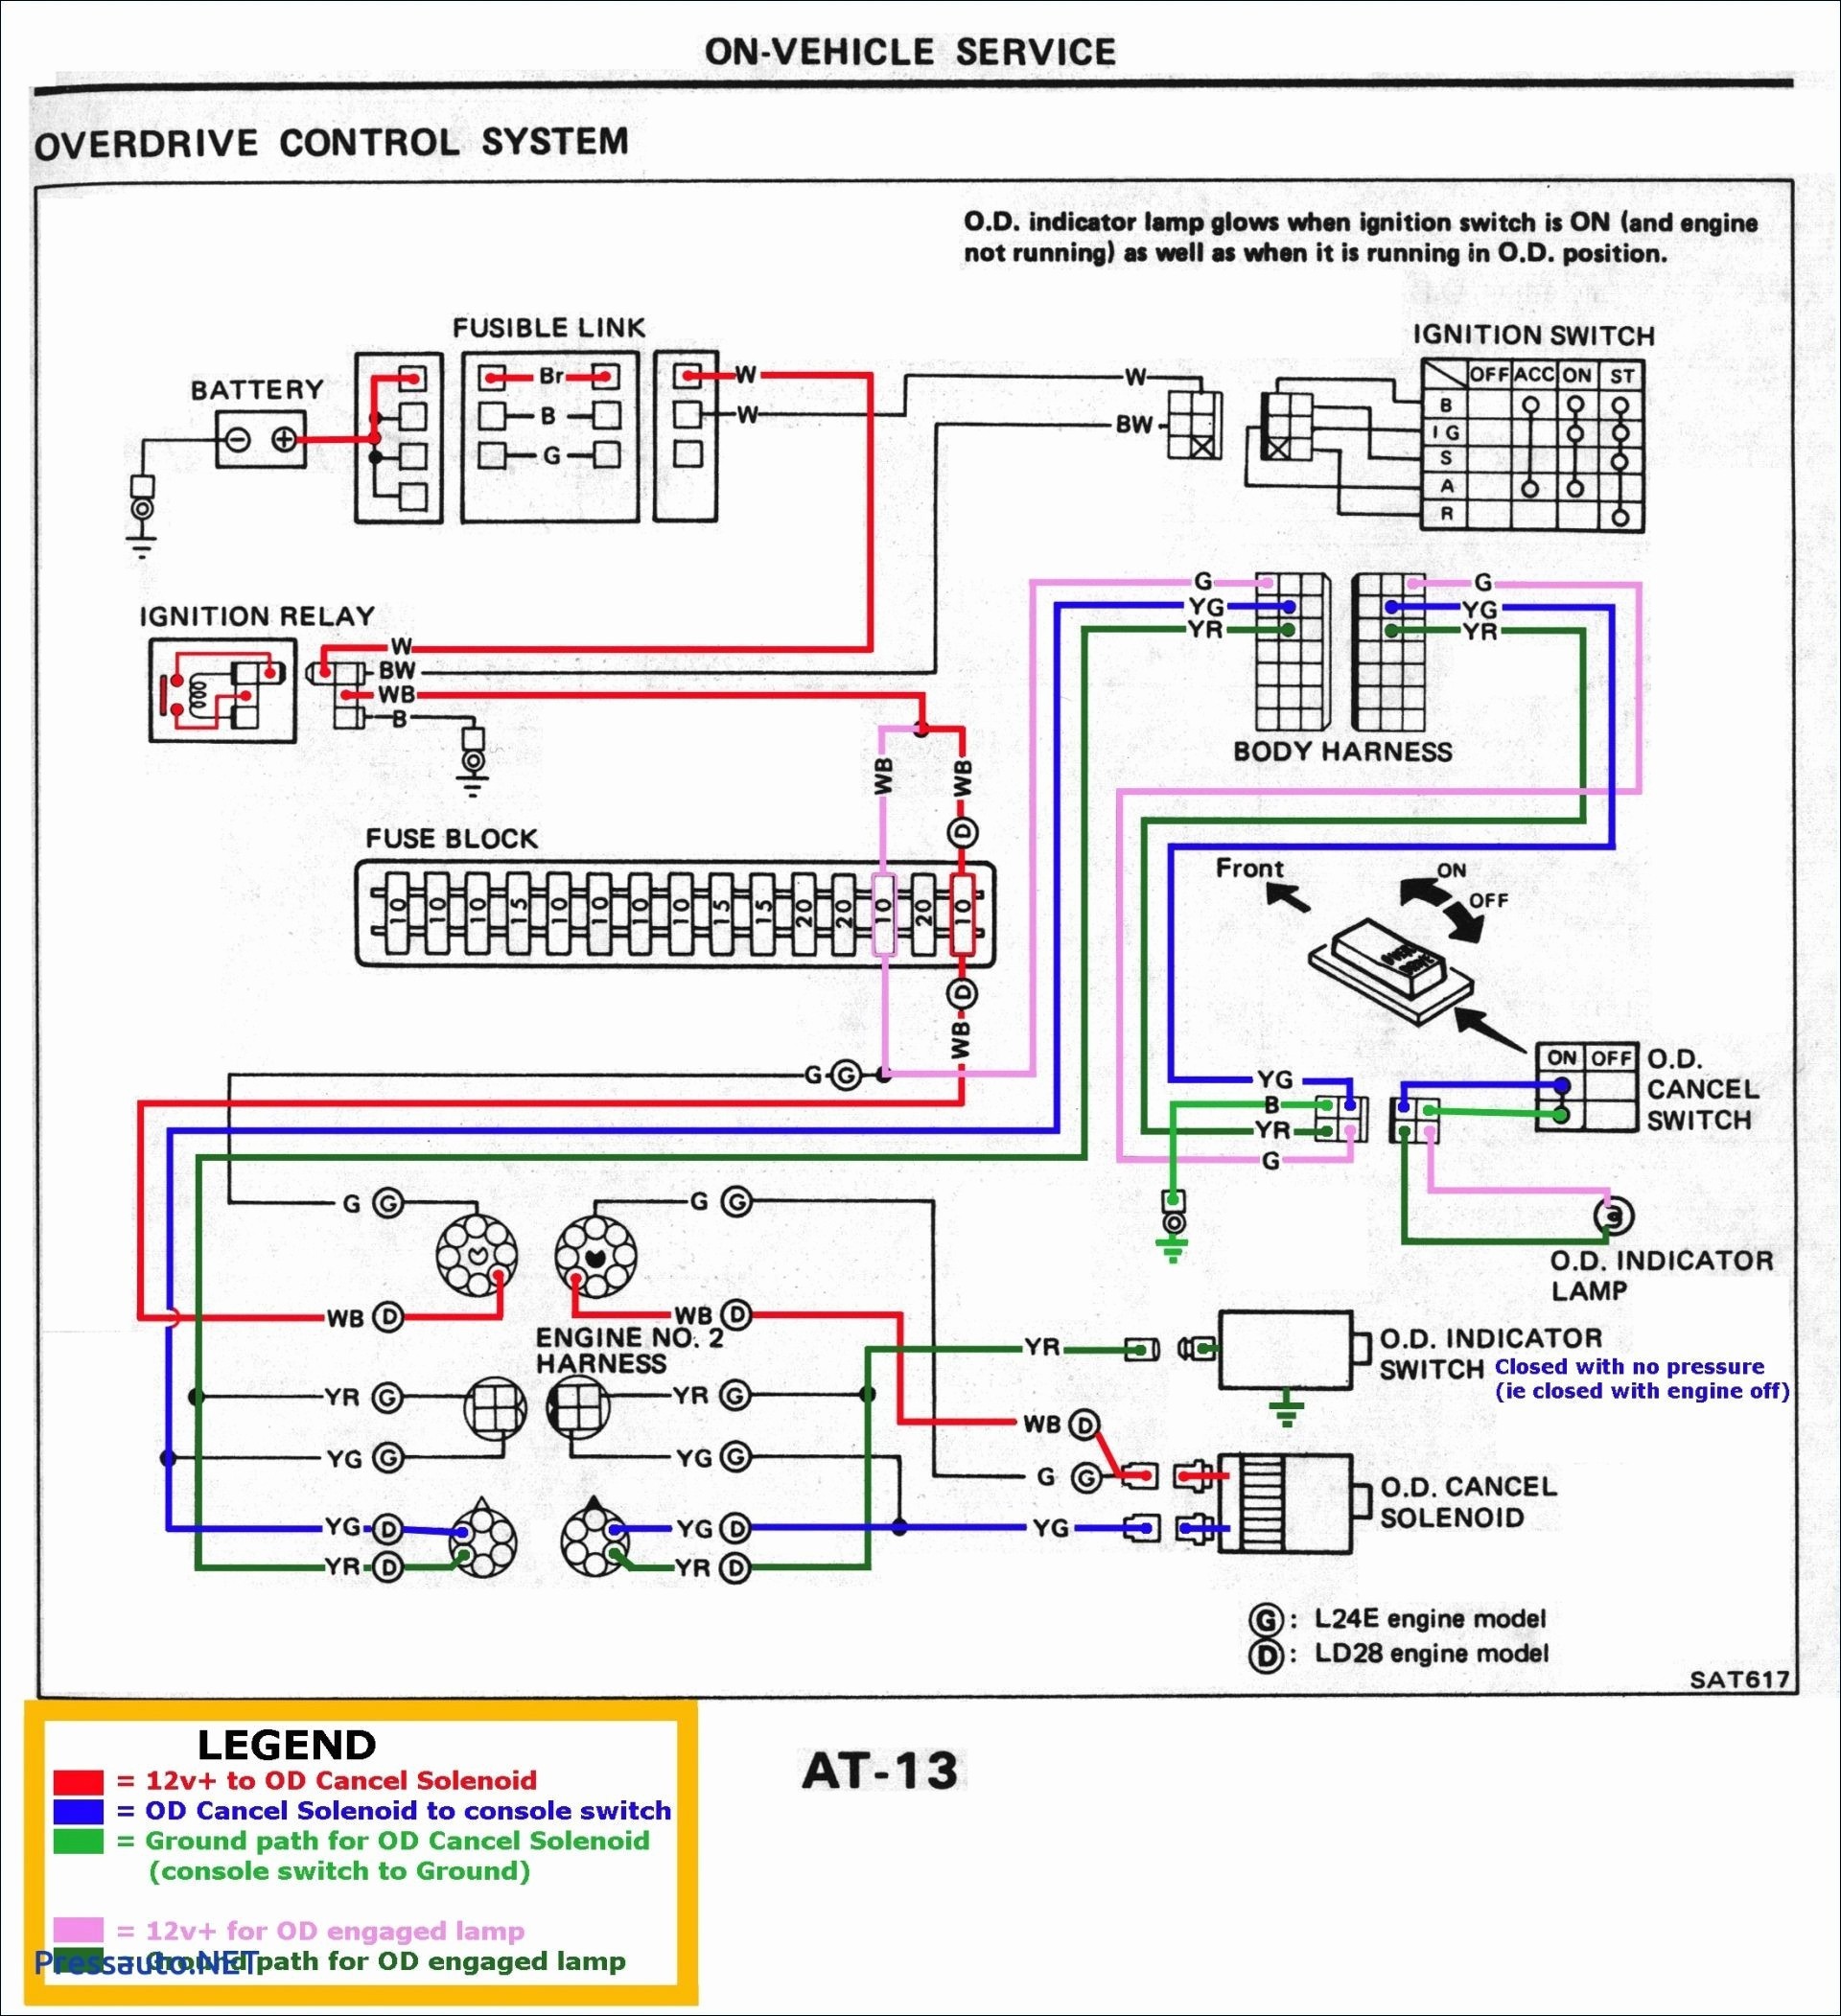 Nissan Relay Wiring Diagram New Wiring Diagram for A Relay to A Switch New Wiring Diagram